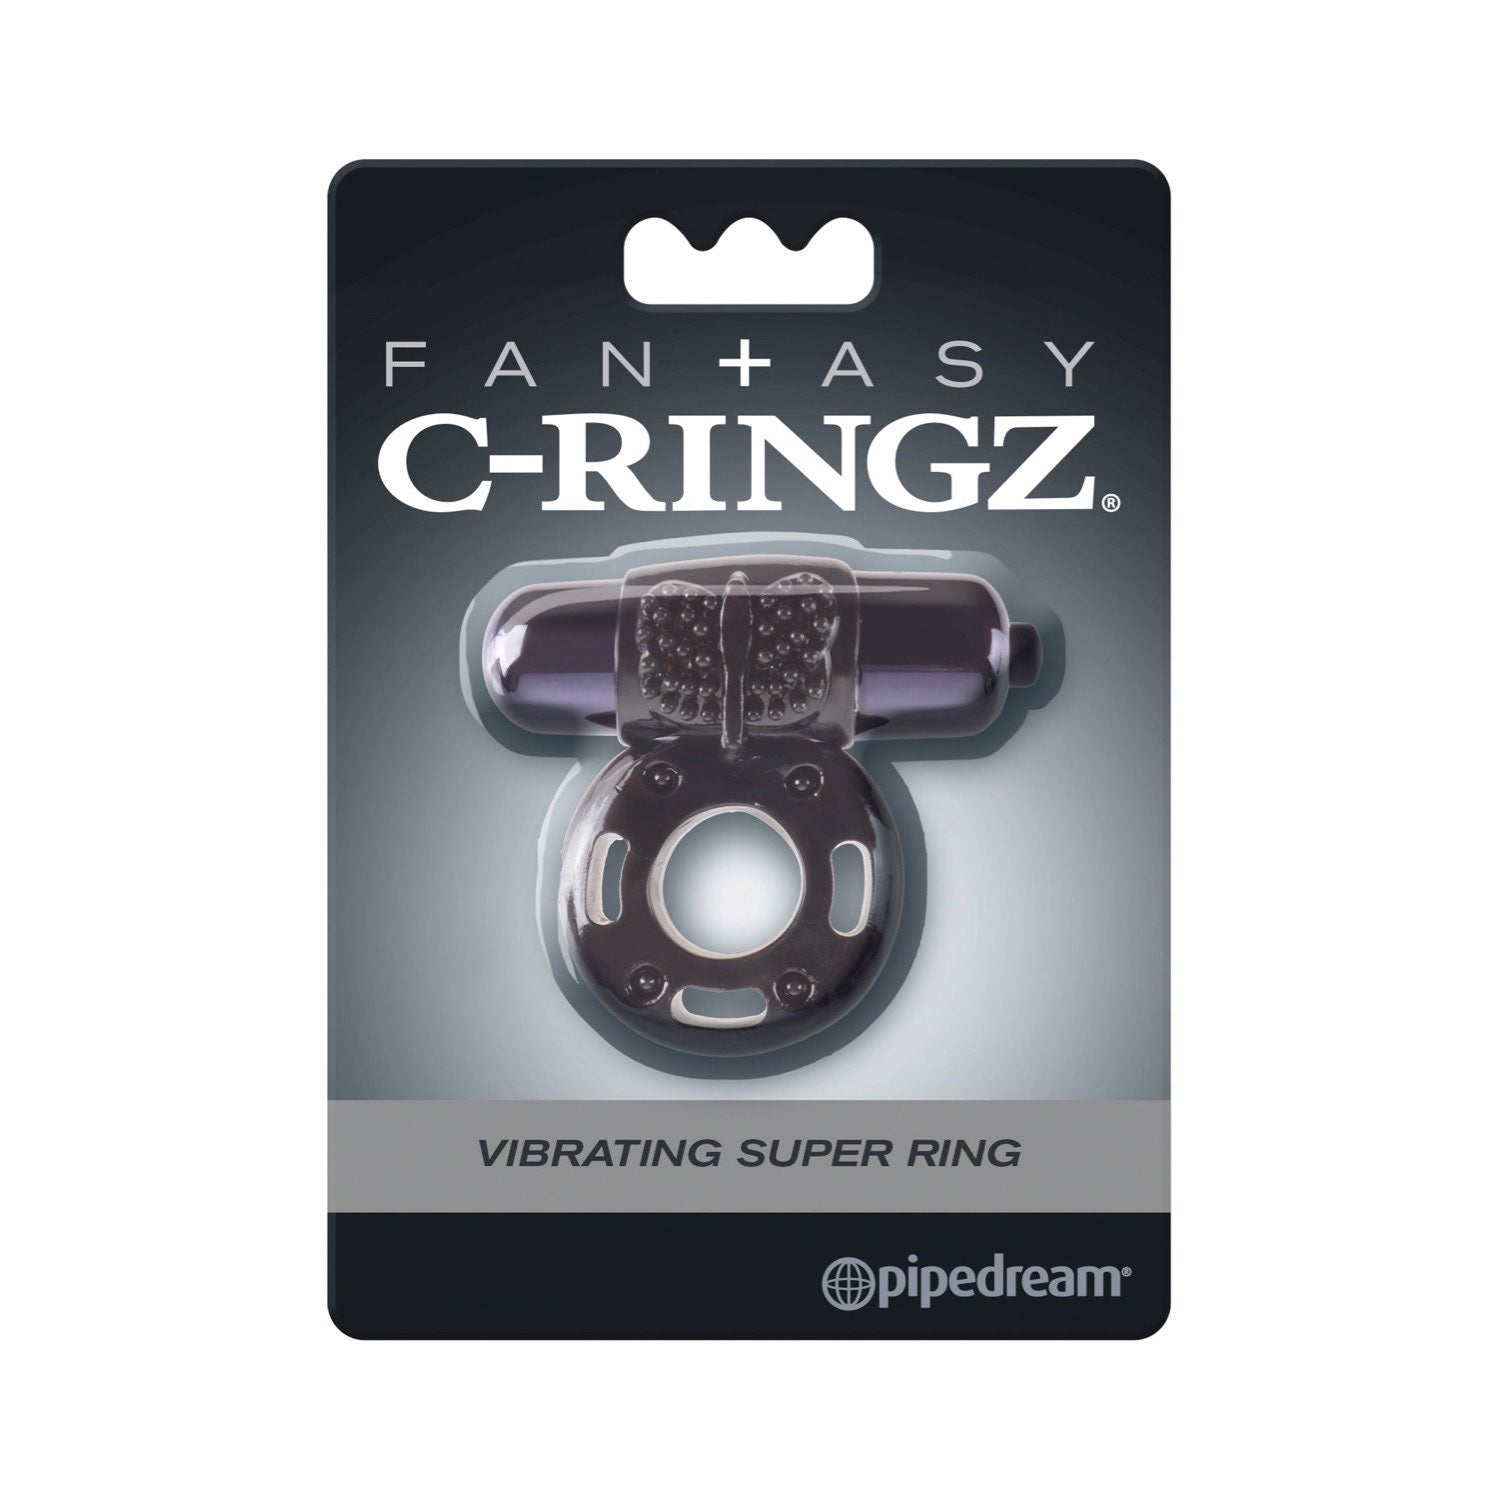 Fantasy C-Ringz Vibrating Super Ring - Black Vibrating Cock Ring by Pipedream